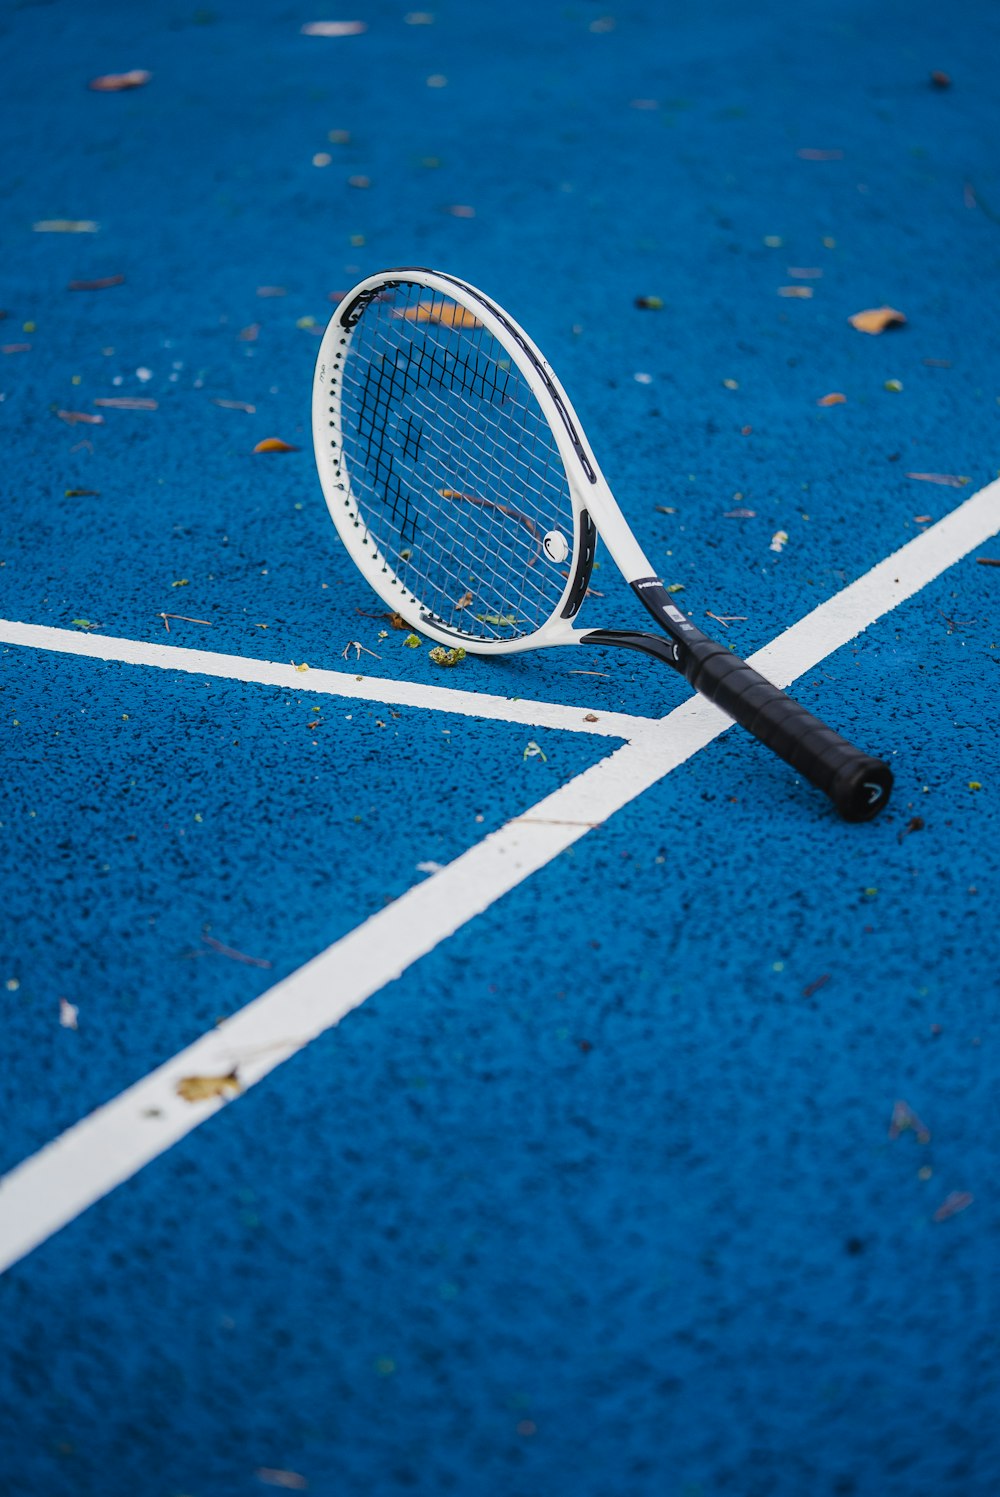 una raqueta de tenis acostada en una cancha de tenis azul